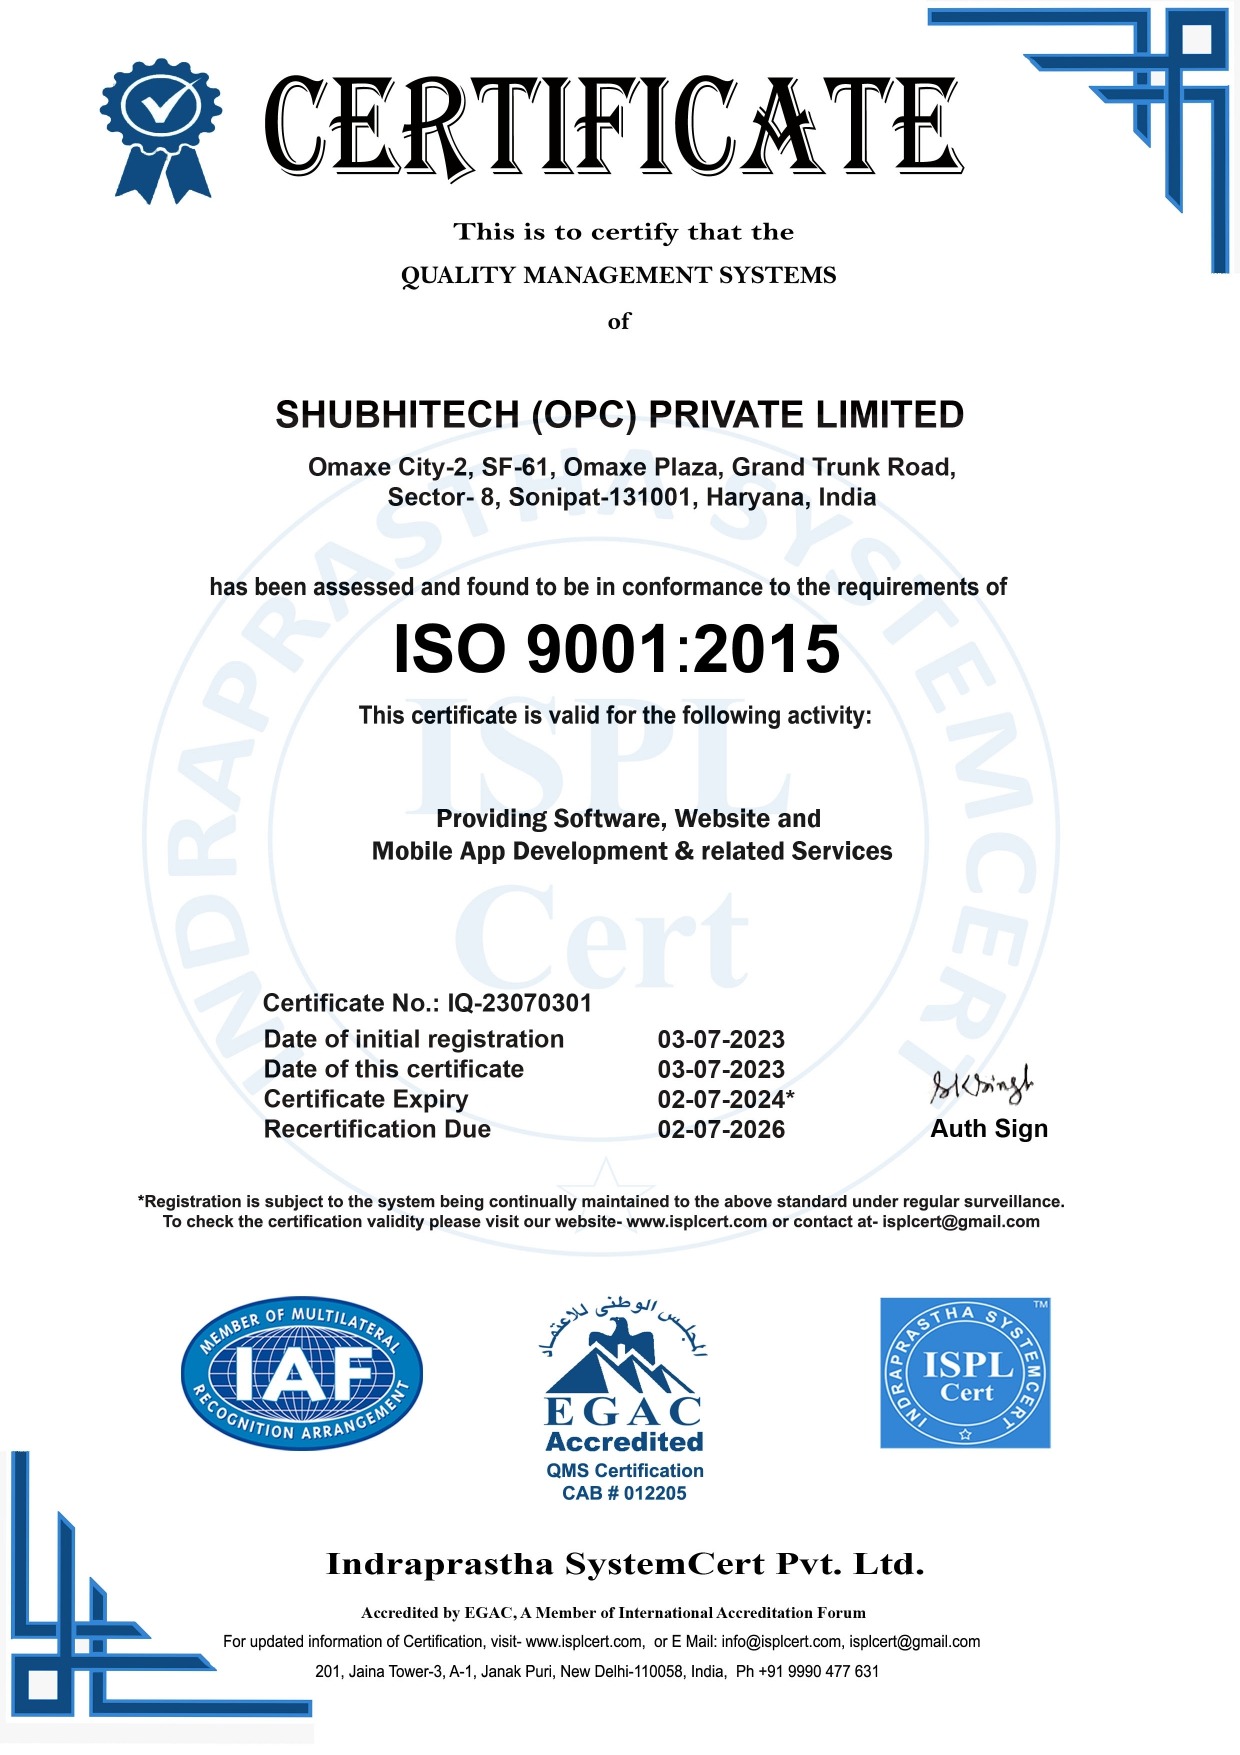 ShubhiTech ISO 9001:2015 Certificate